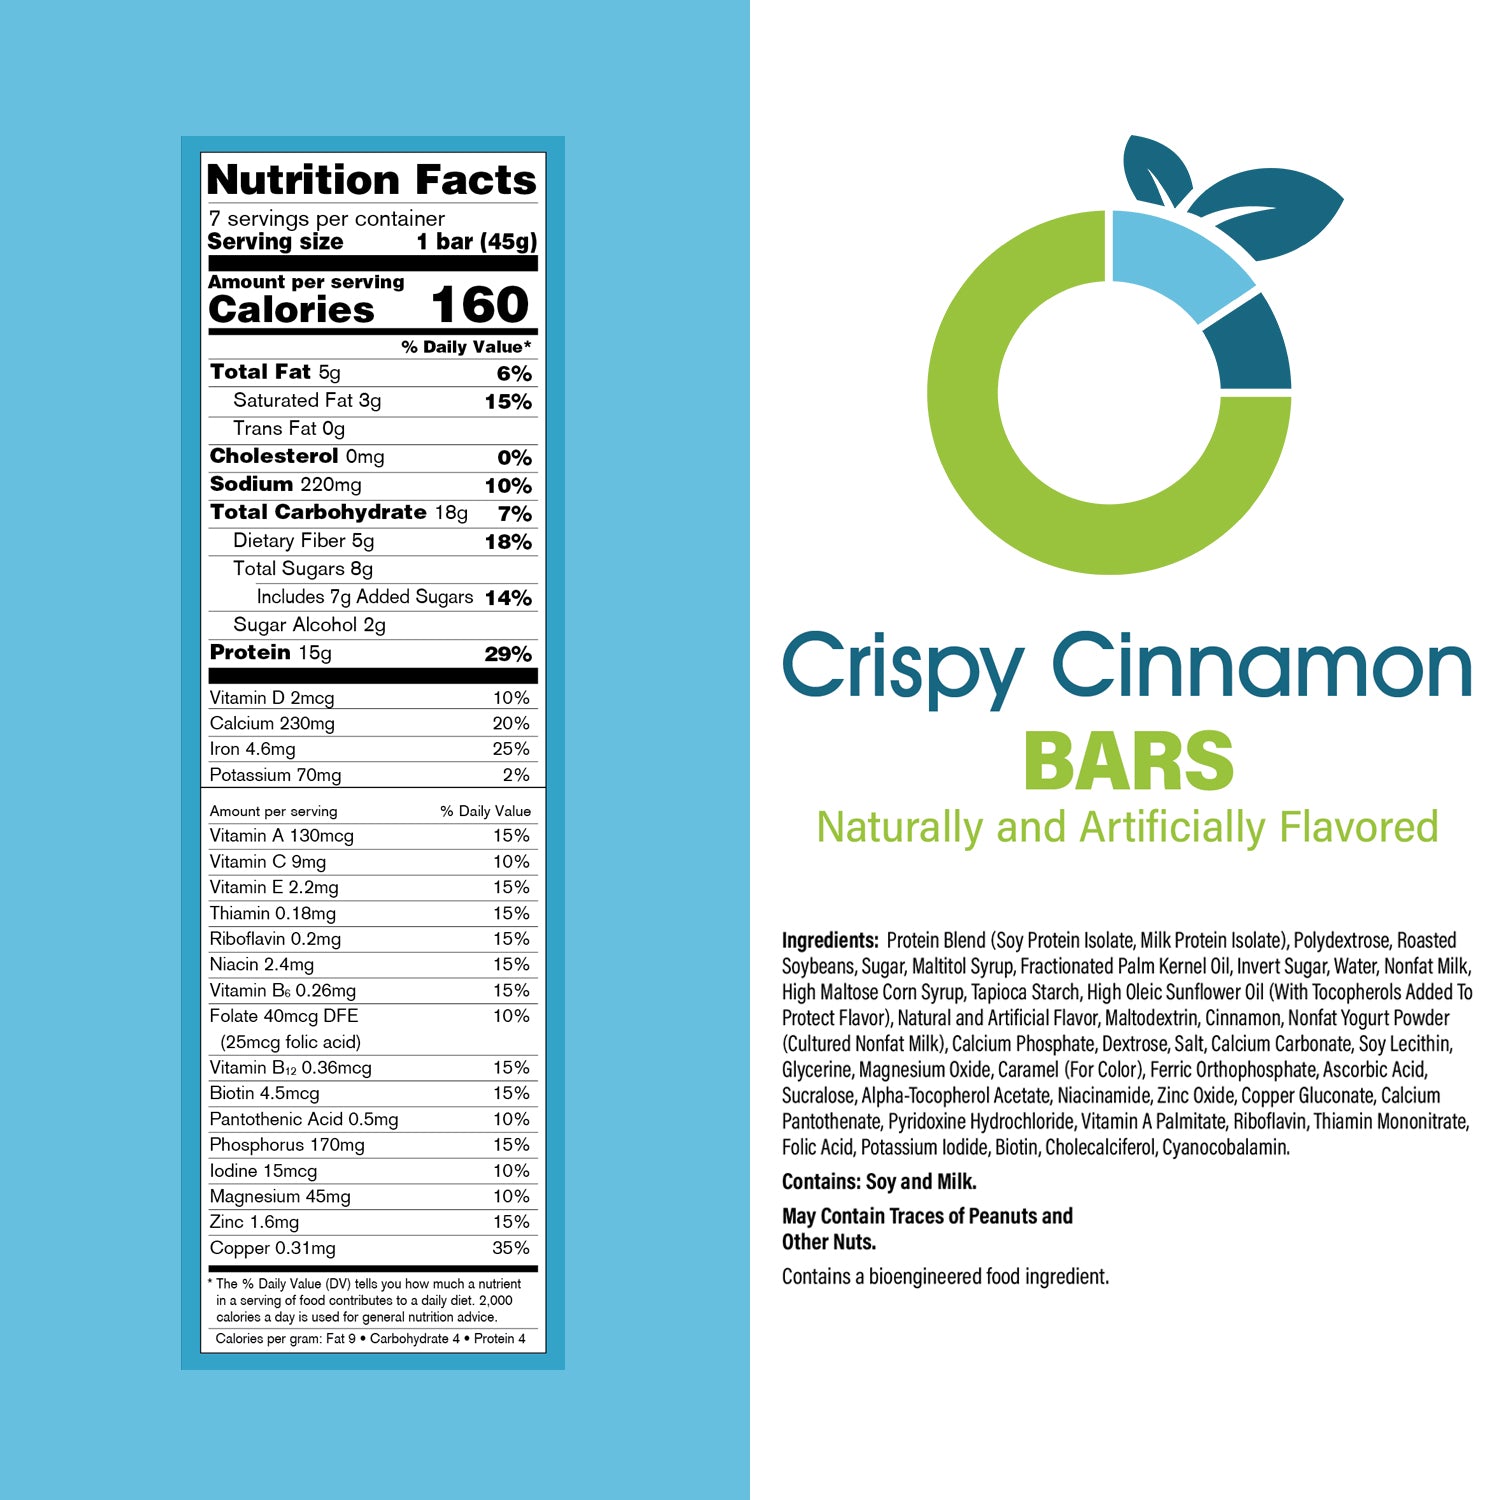 Crispy Cinnamon Bars